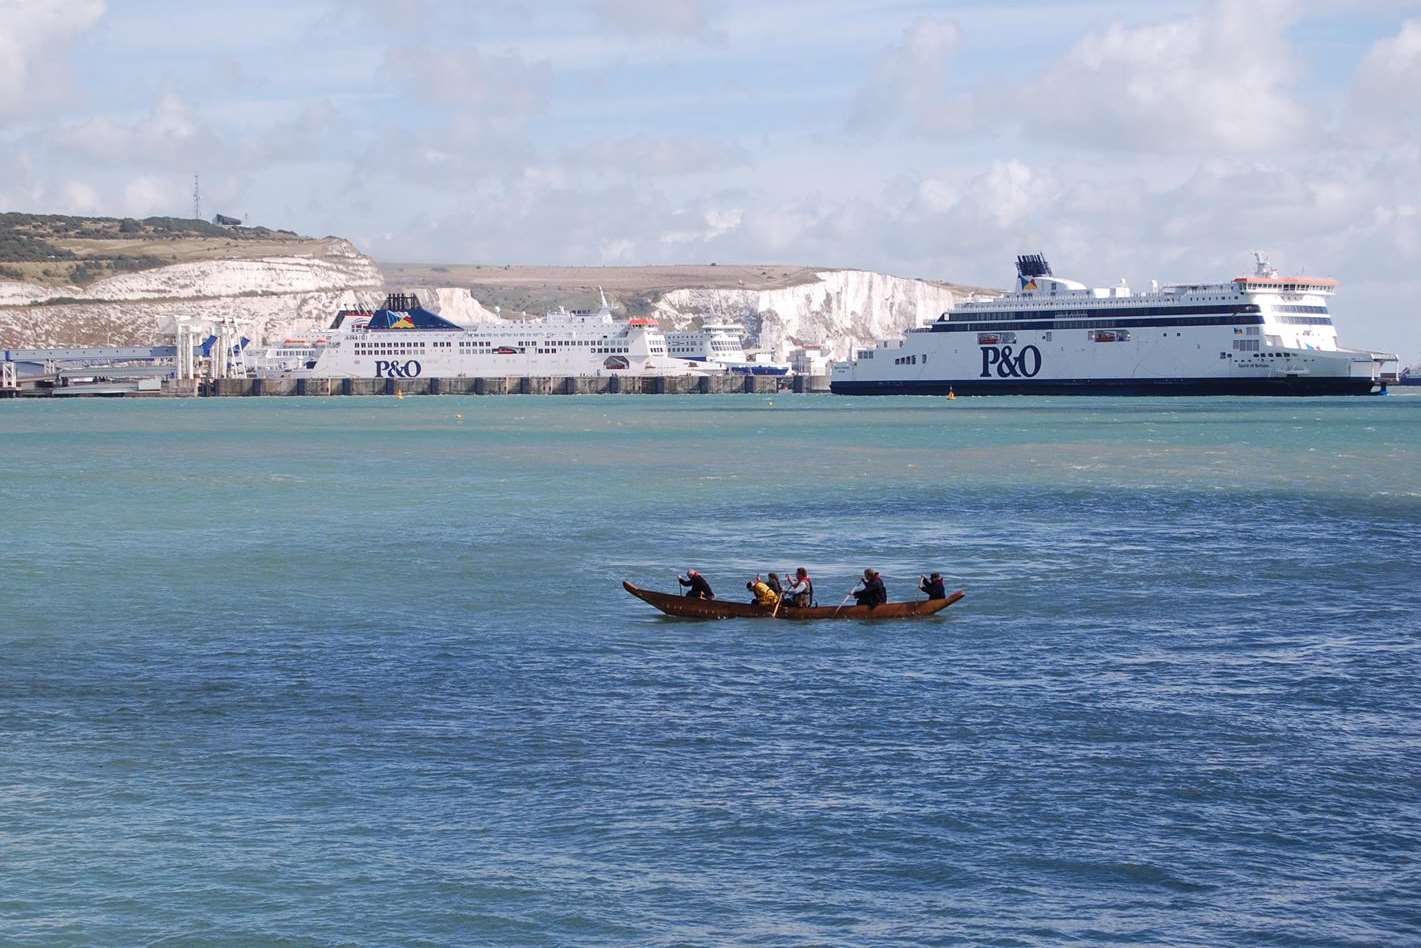 Tthe arrests were made at the Port of Dover